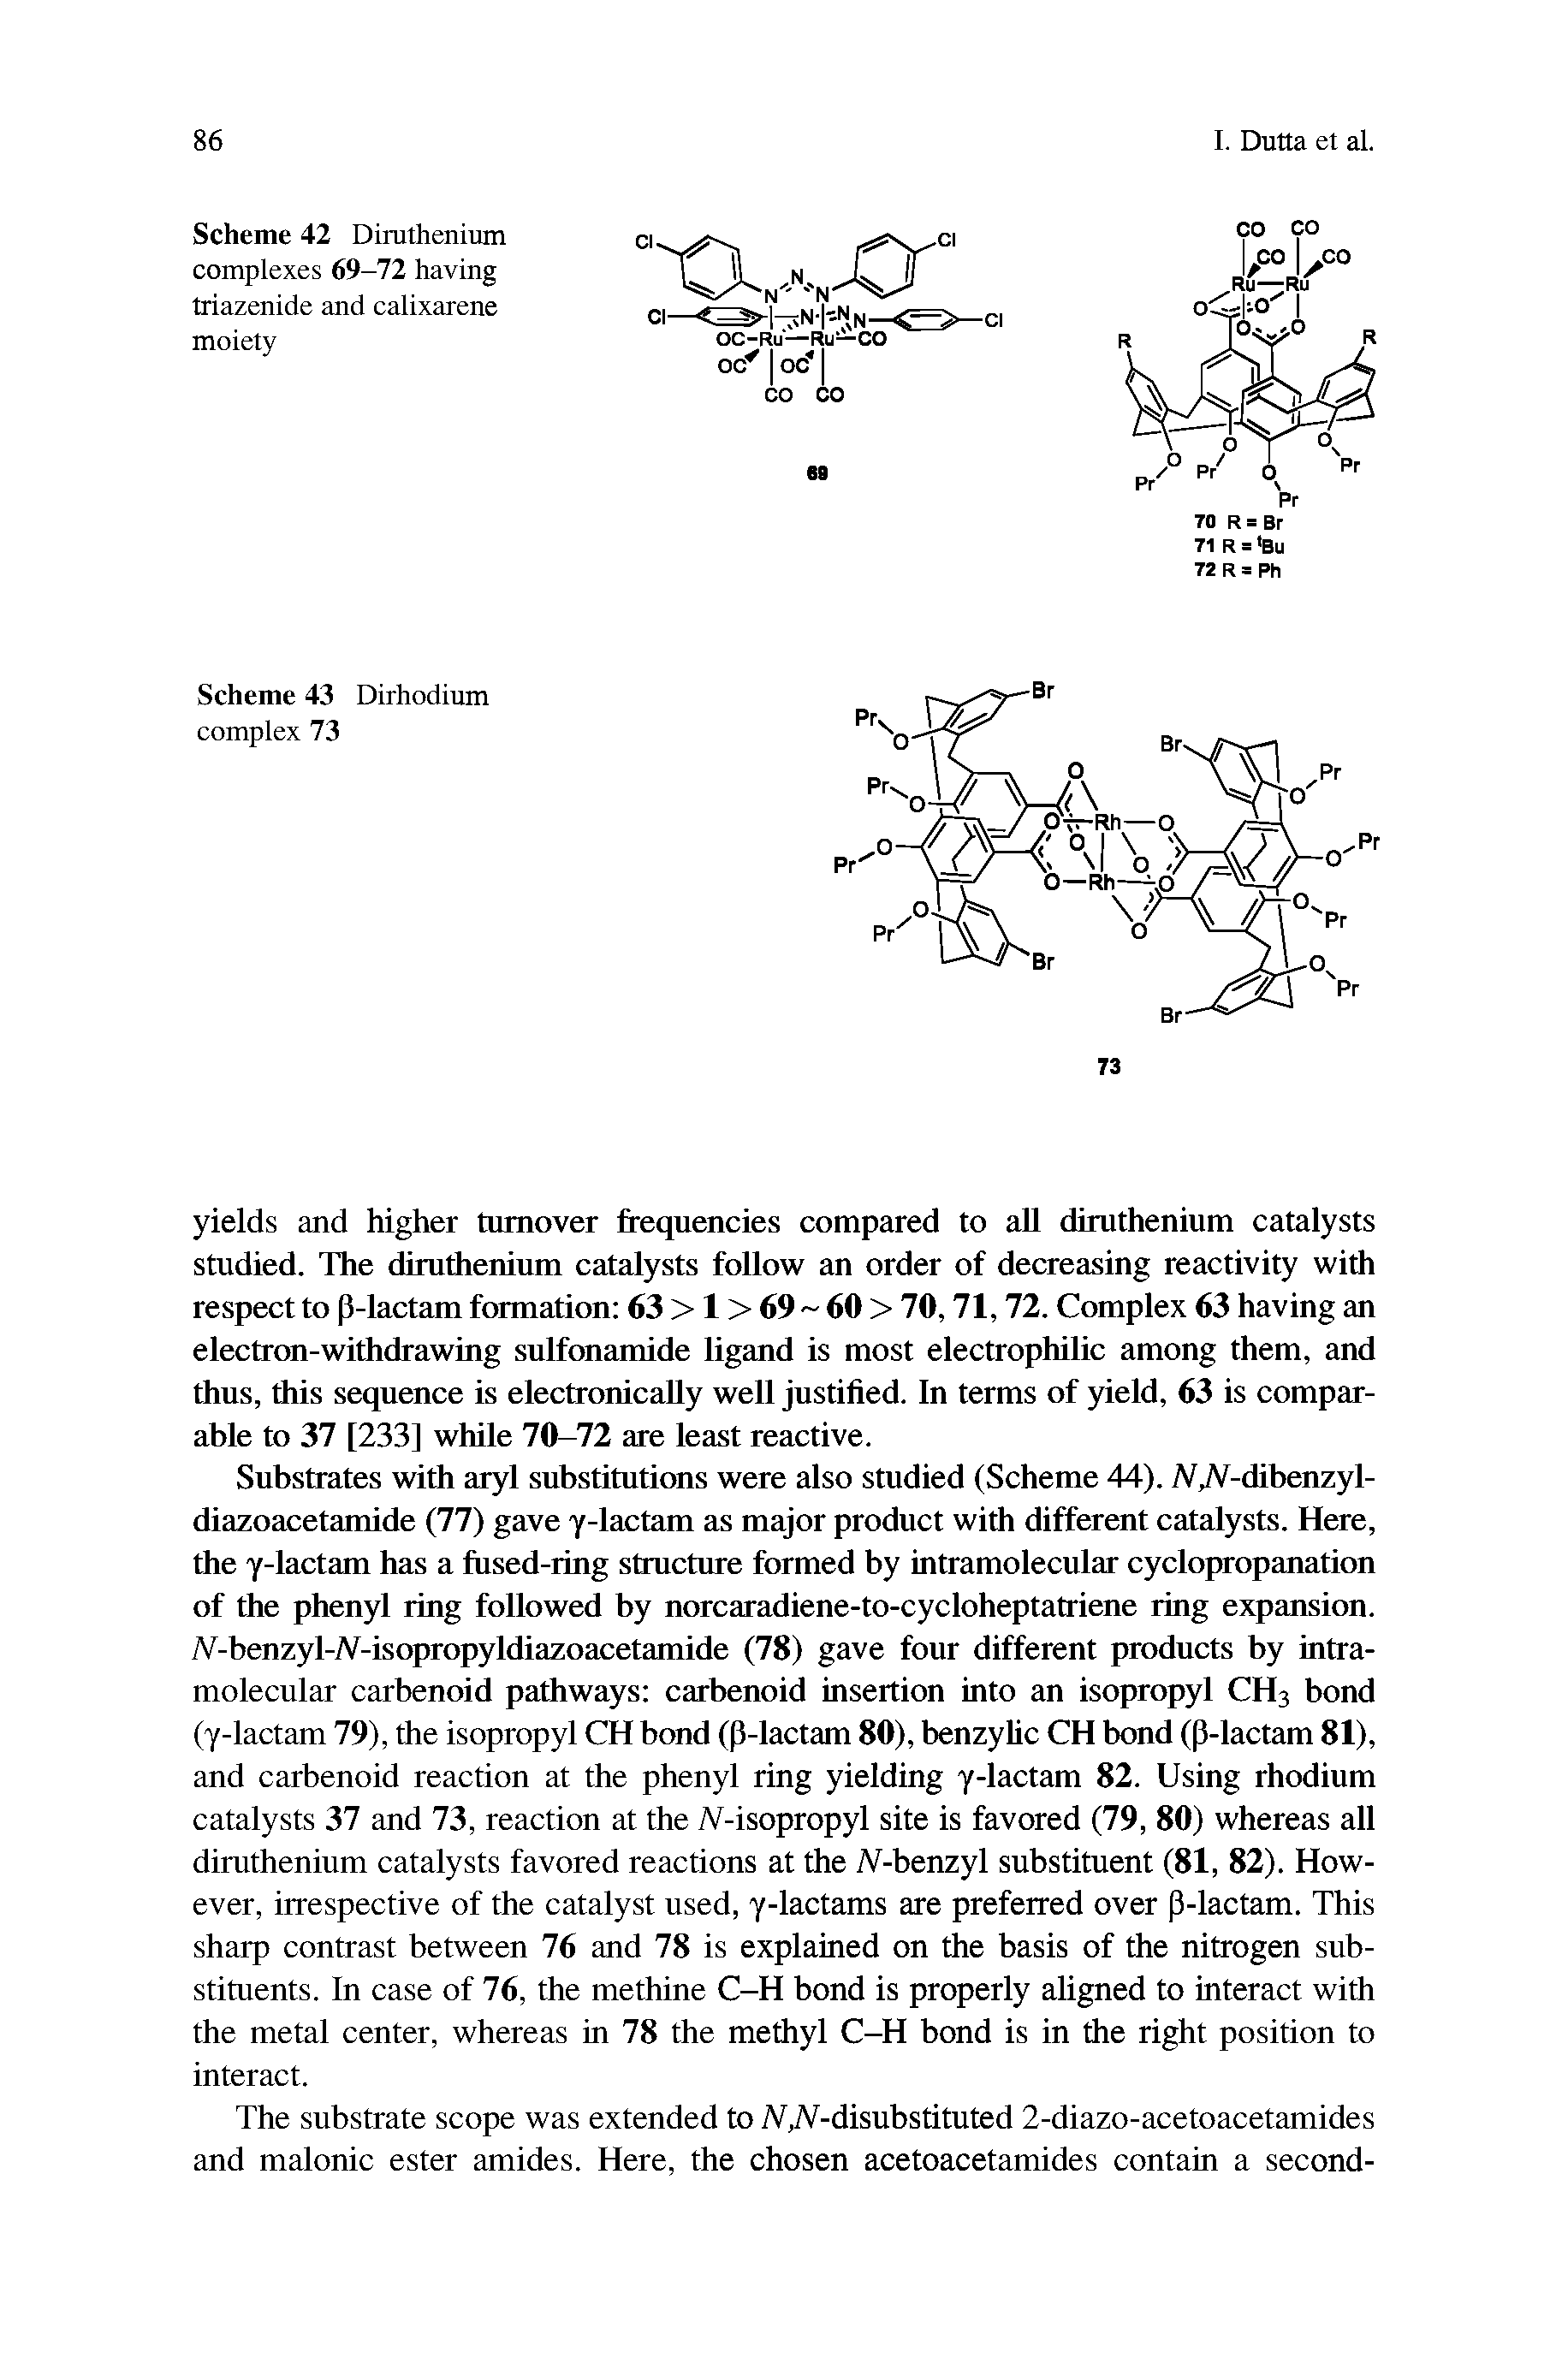 Scheme 42 Diruthenium complexes 69-72 having Iriazenide and calixarene moiety...